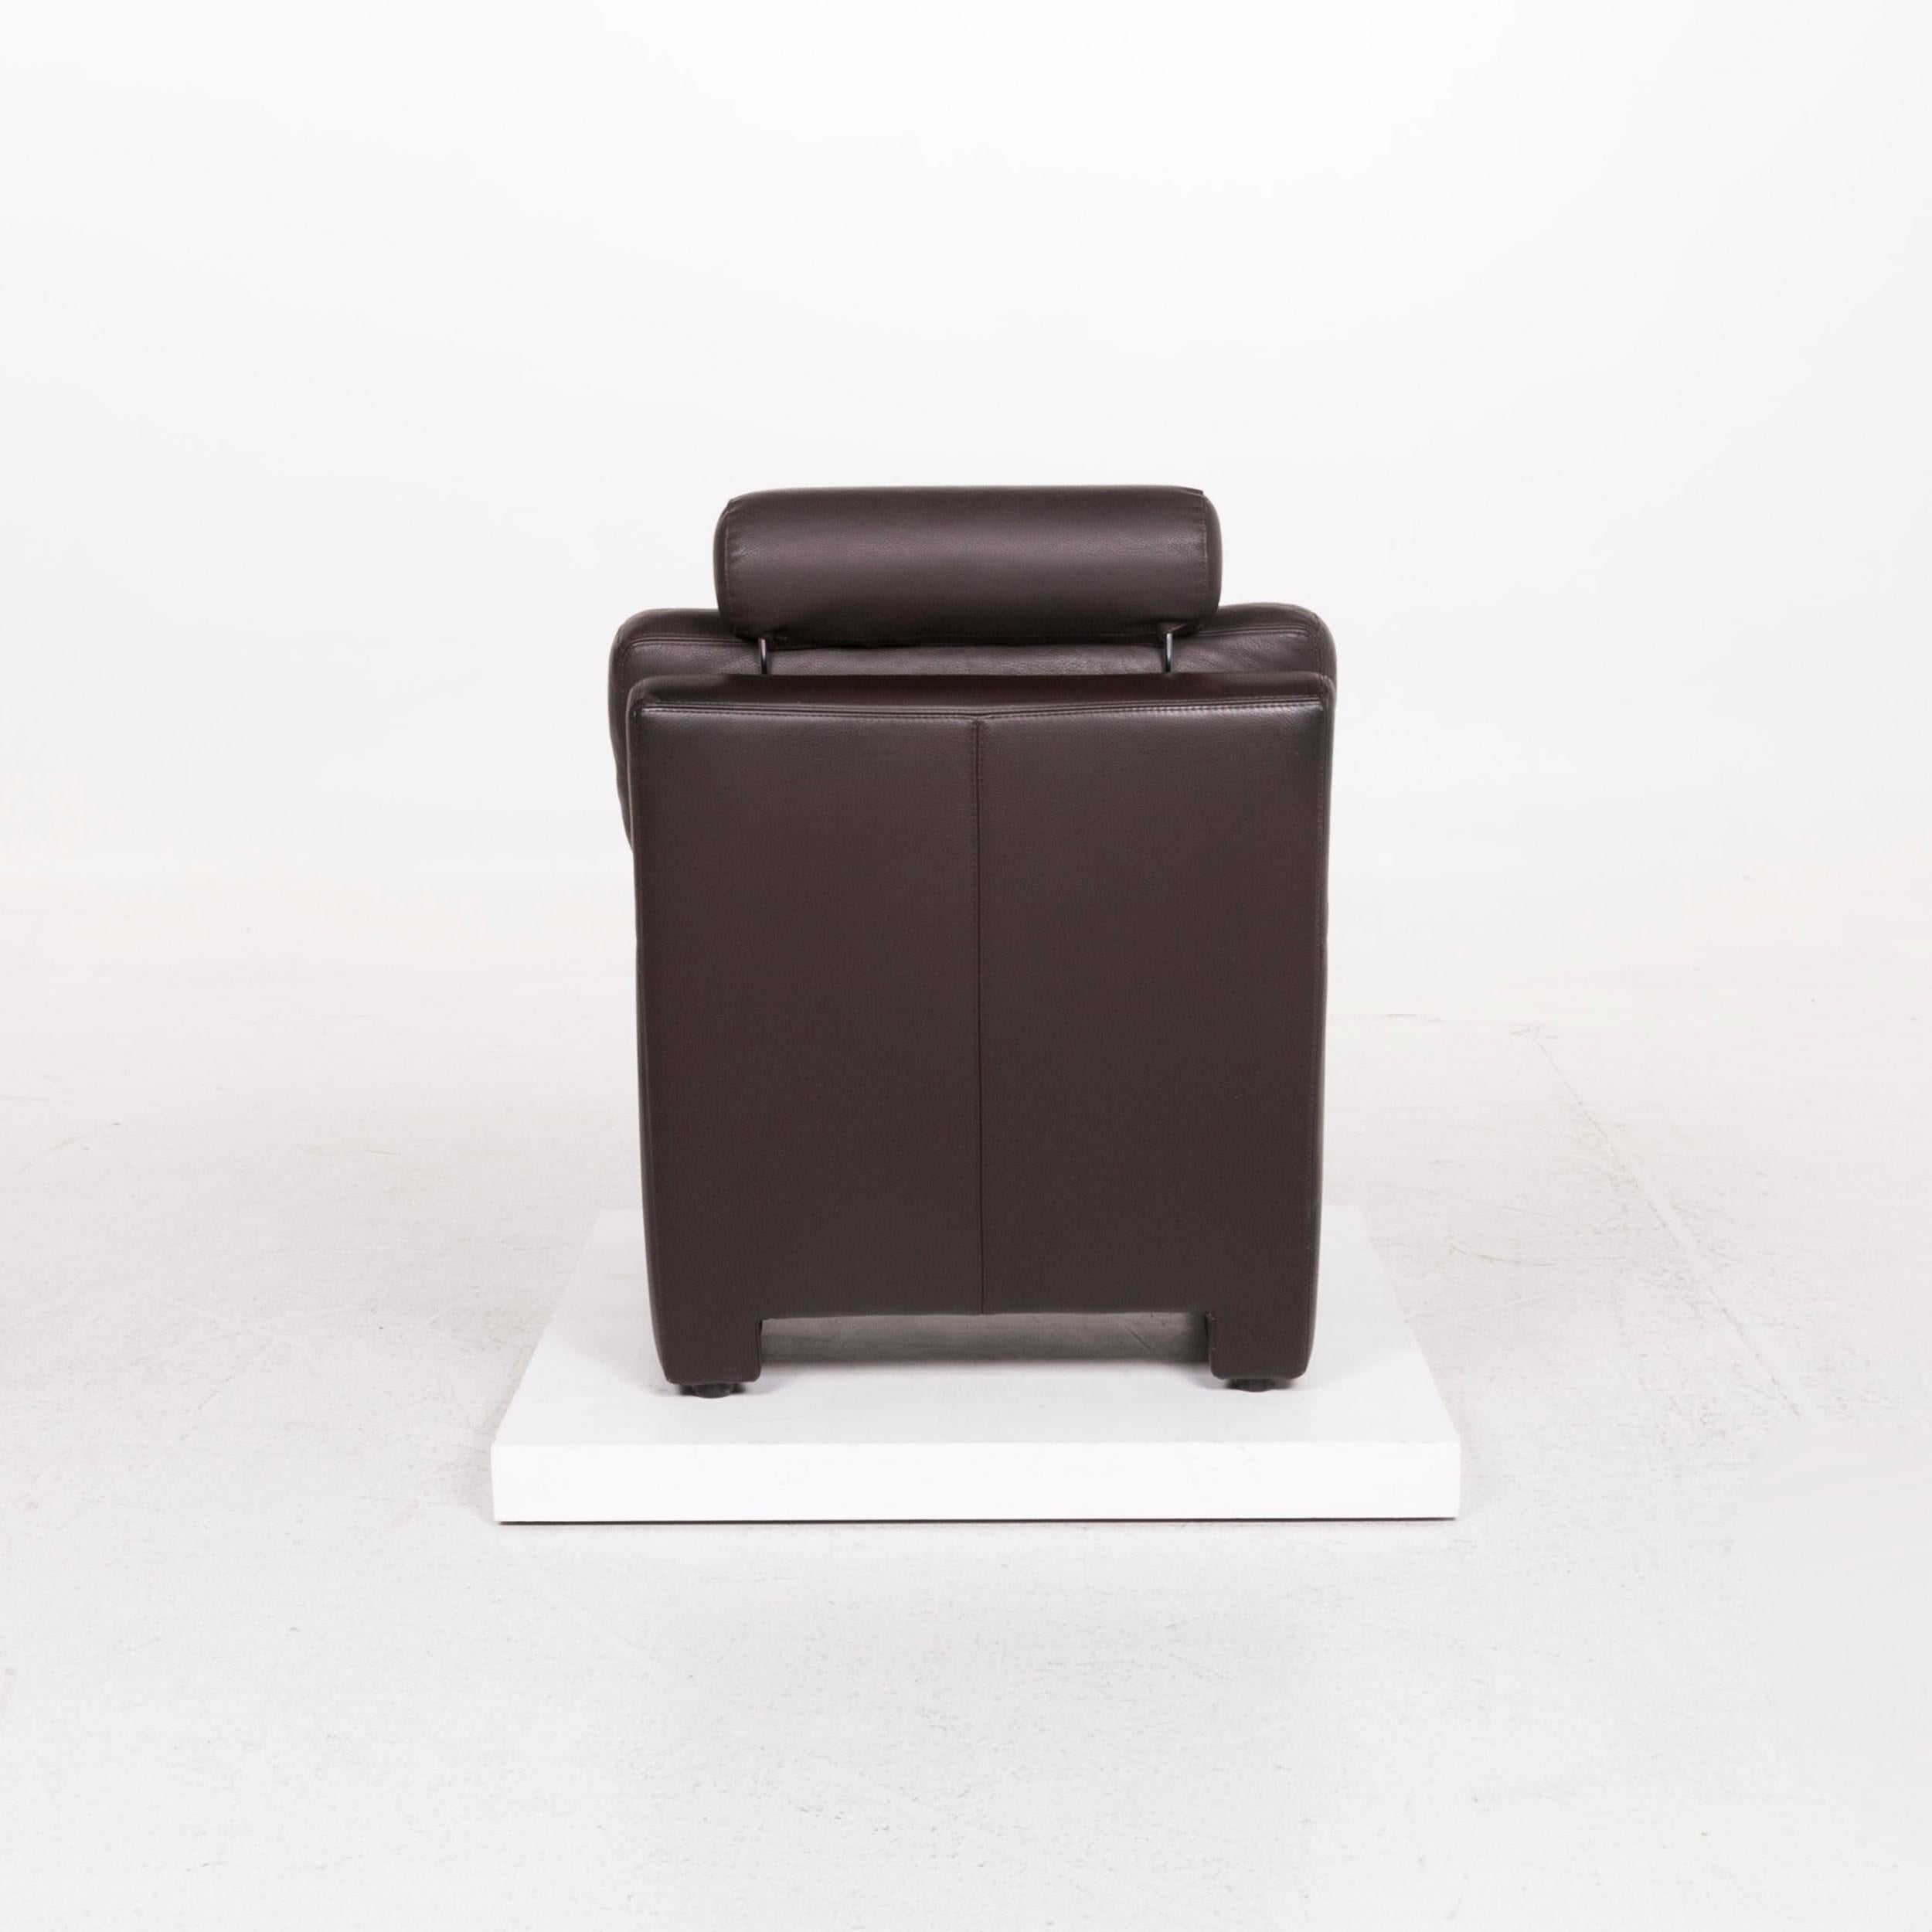 Sample Ring Leather Sofa Set Brown Dark Brown 1 Corner Sofa 1 Armchair Incl For Sale 9